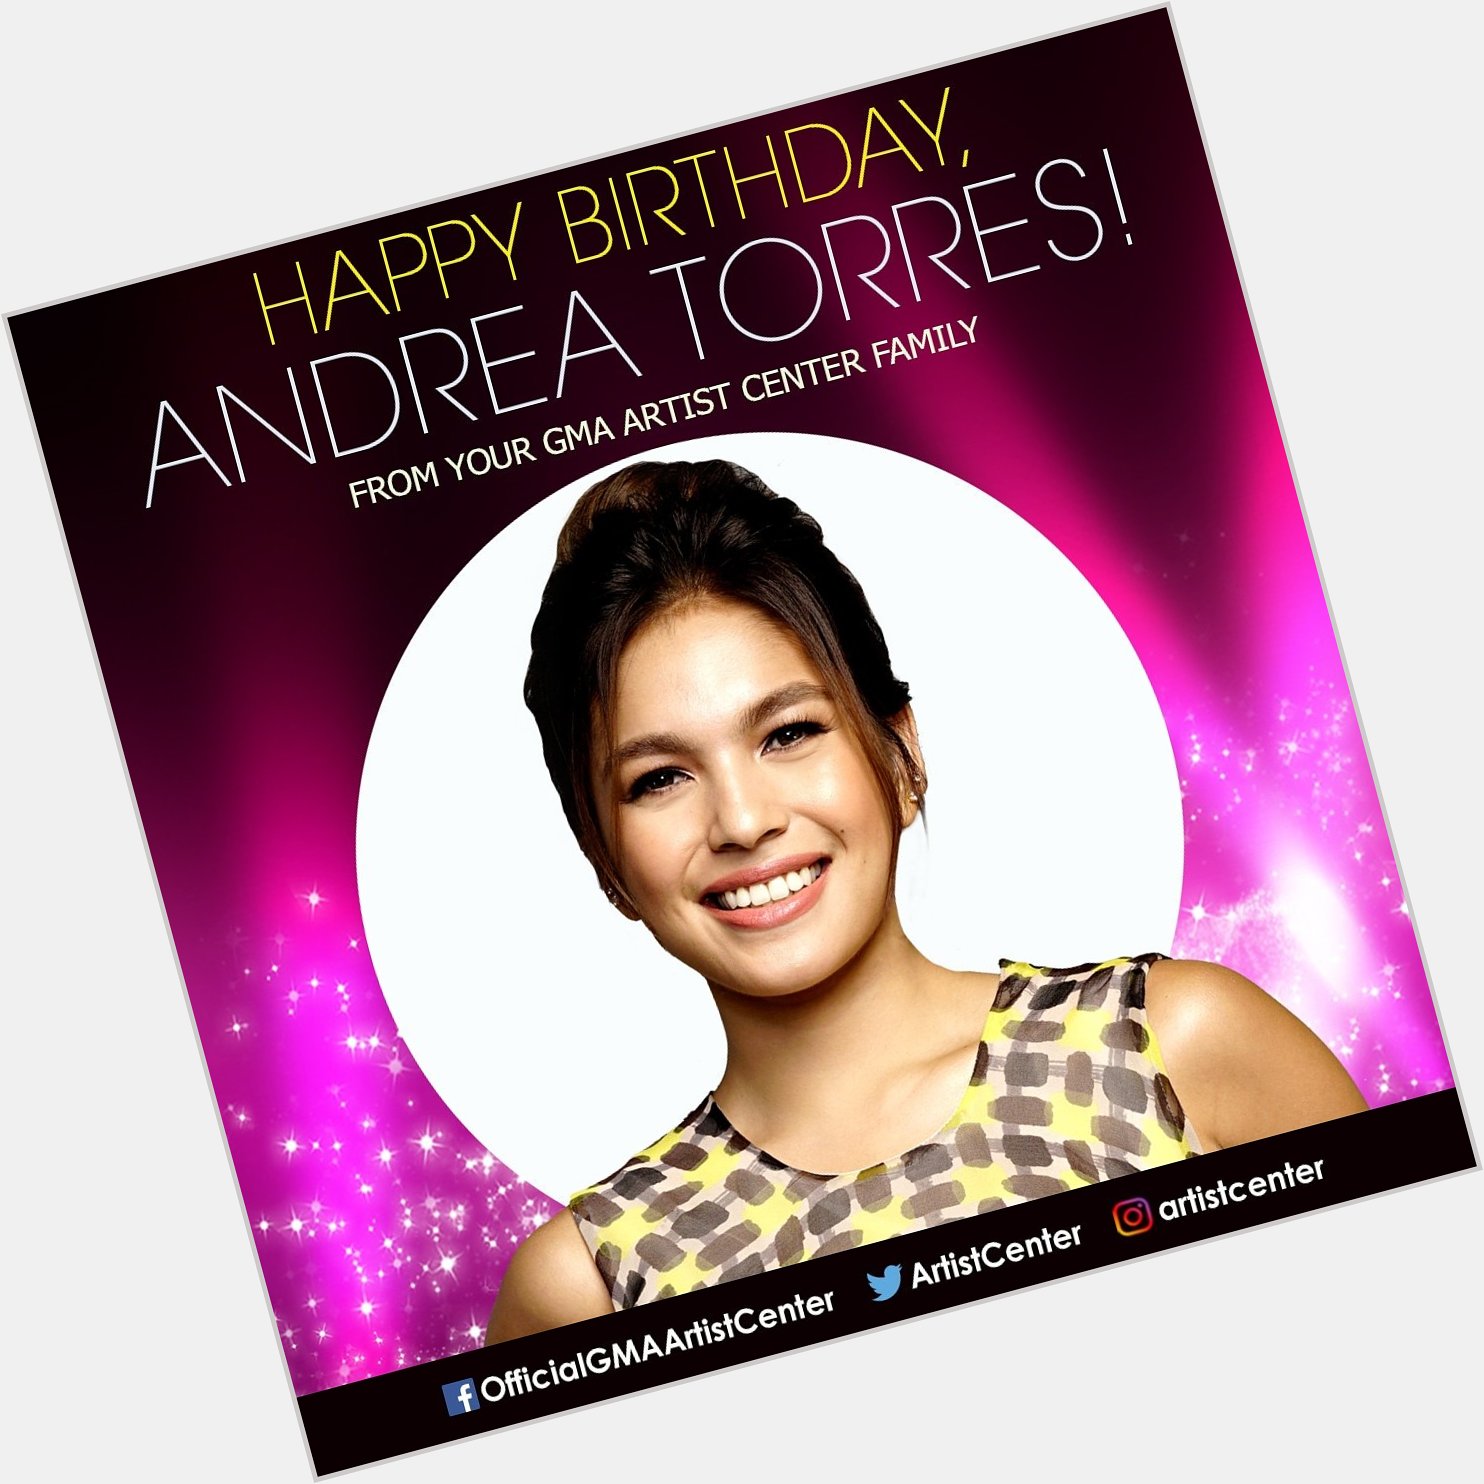 Happy Birthday to star Andrea Torres! 